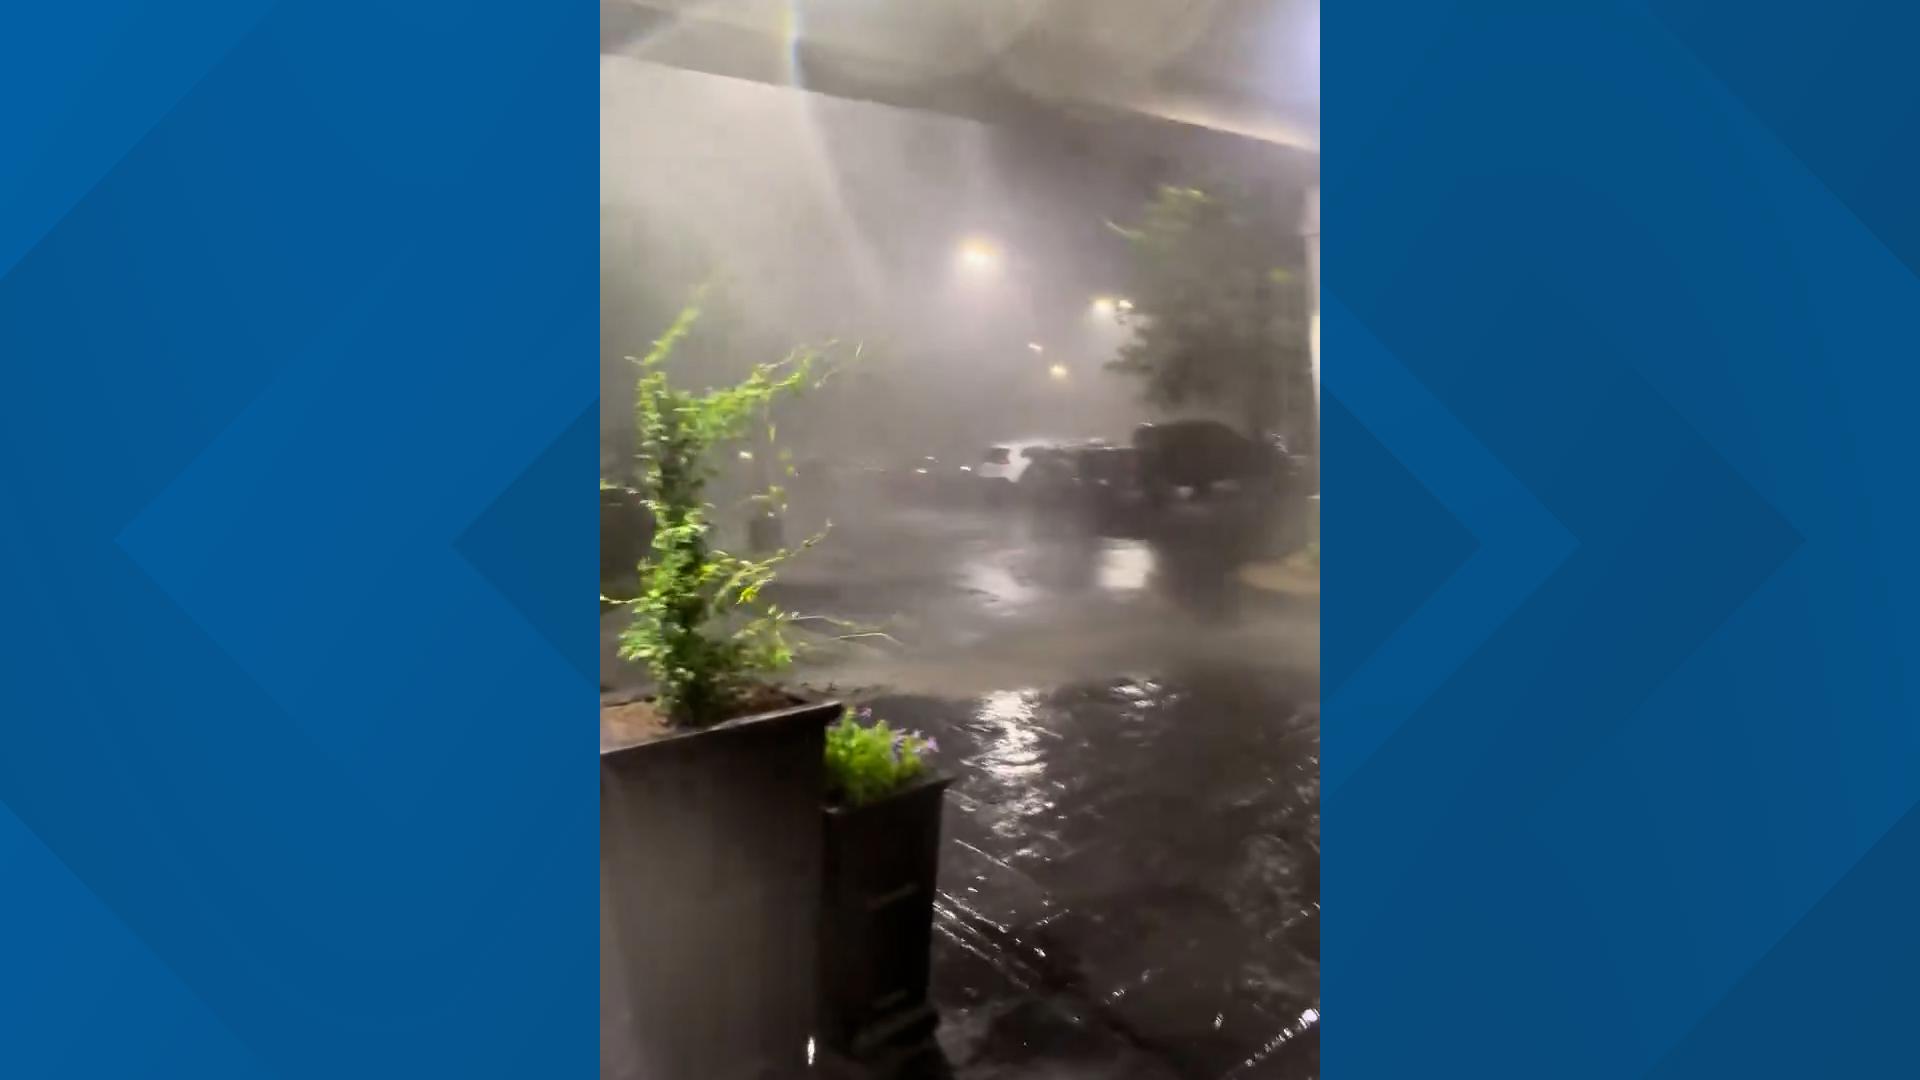 Video shows a strong tornado battering a Hampton Inn in Oklahoma